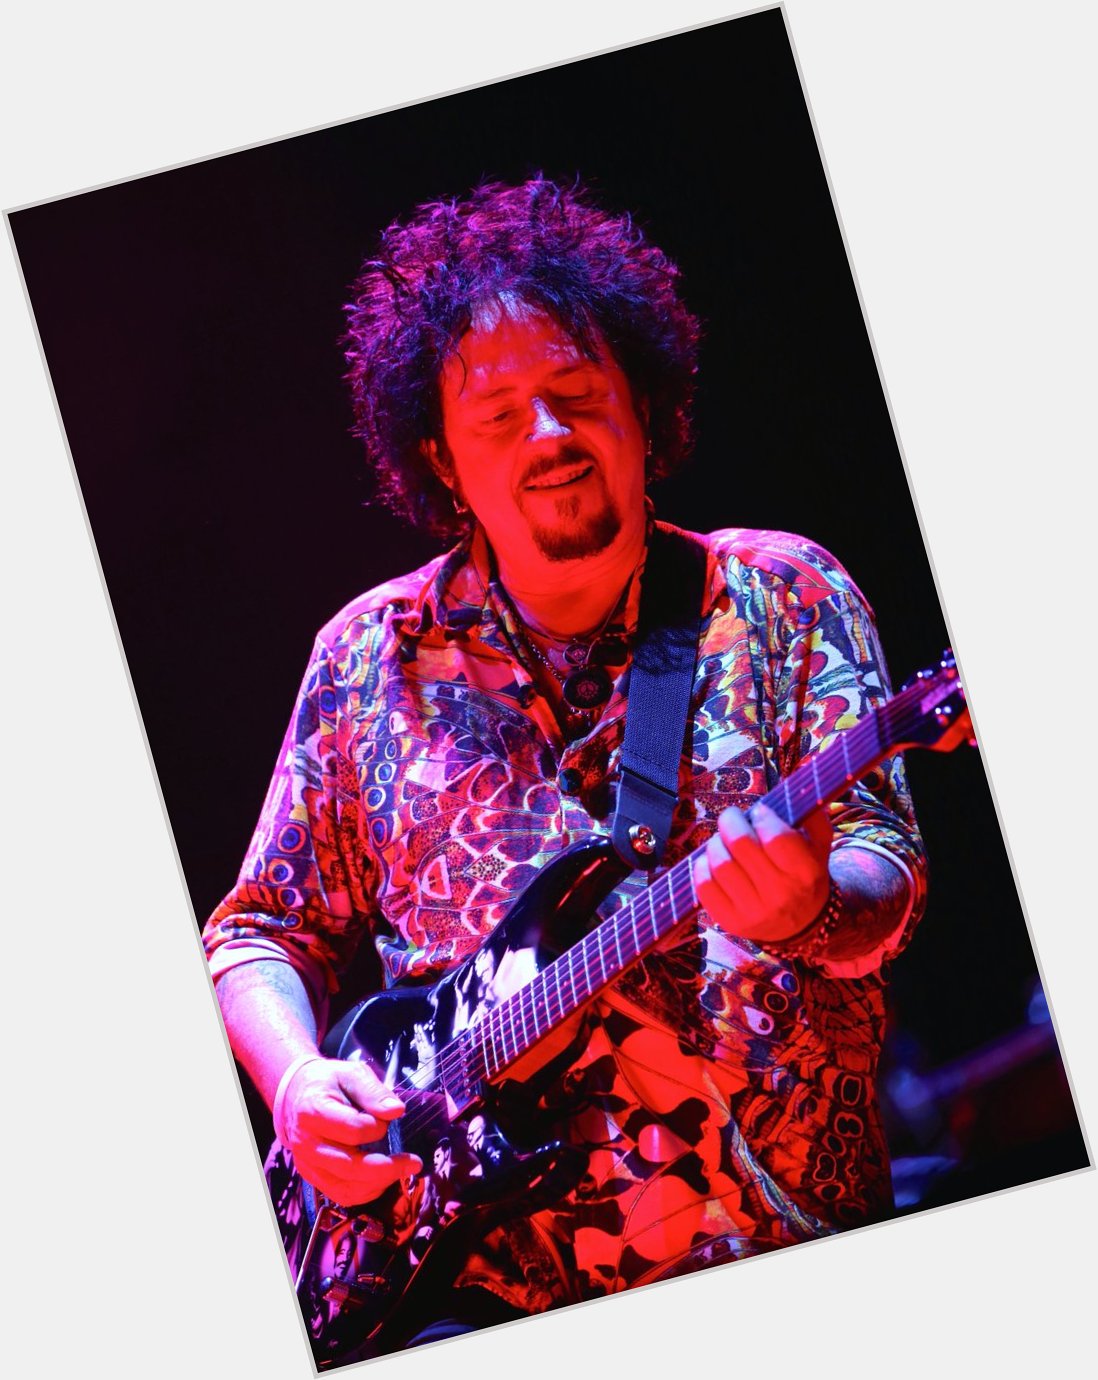 Please join us in wishing Steve Lukather Happy Birthday!!! 